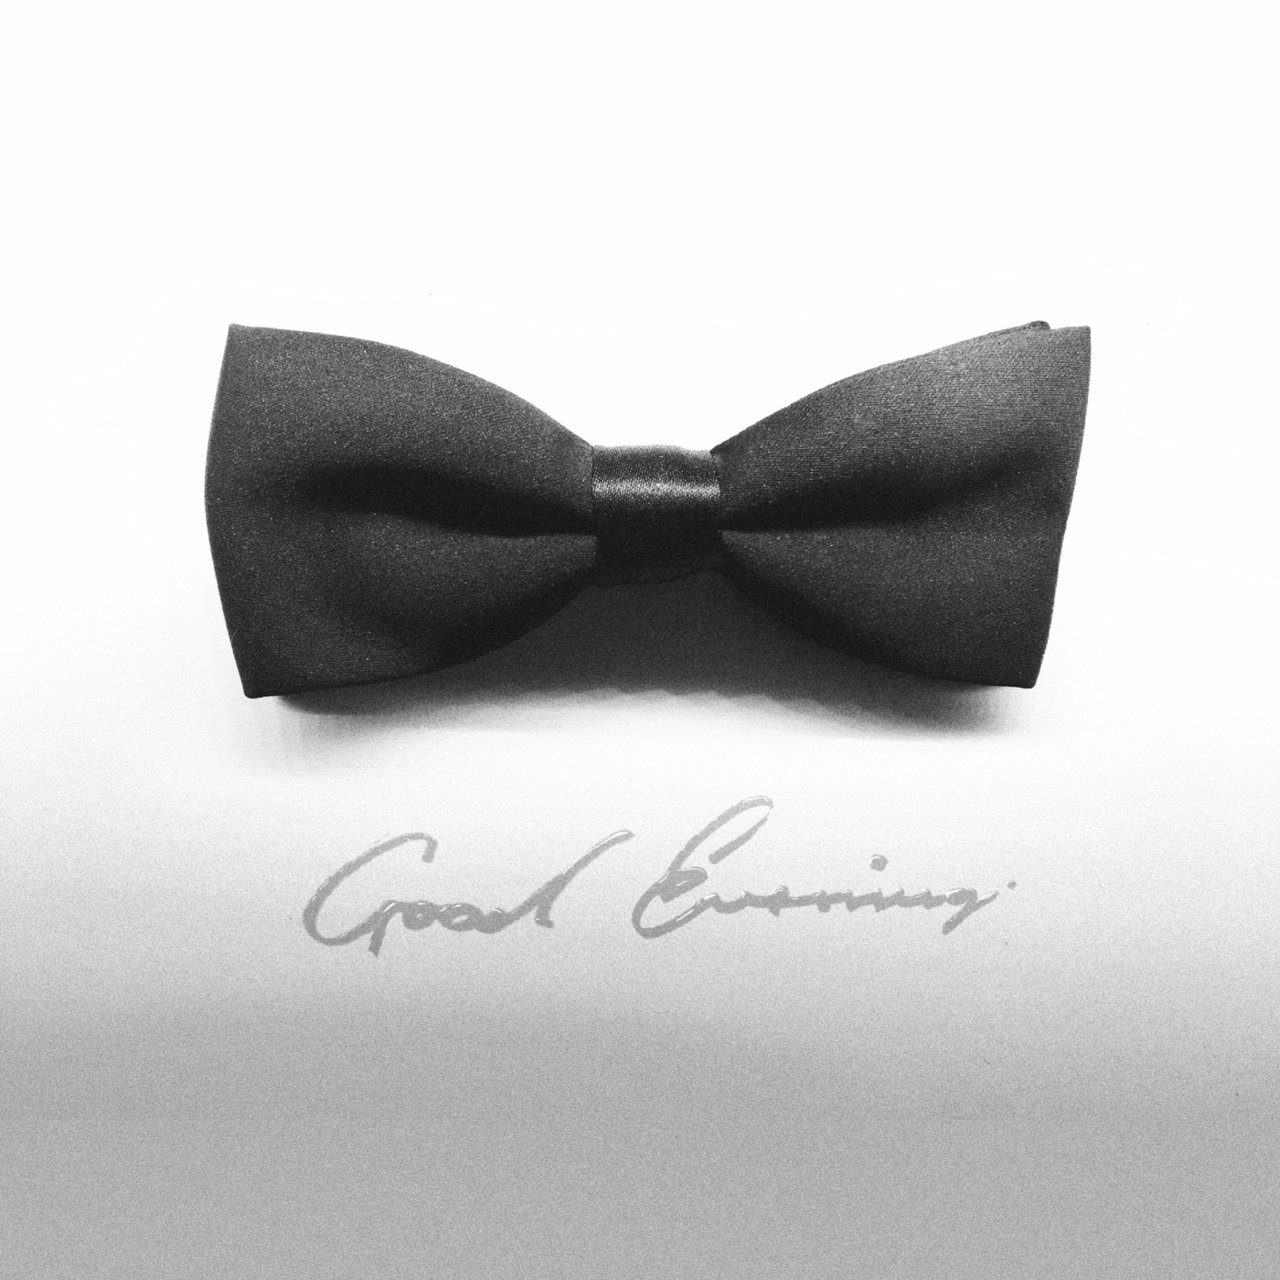 Deorro — Good Evening cover artwork